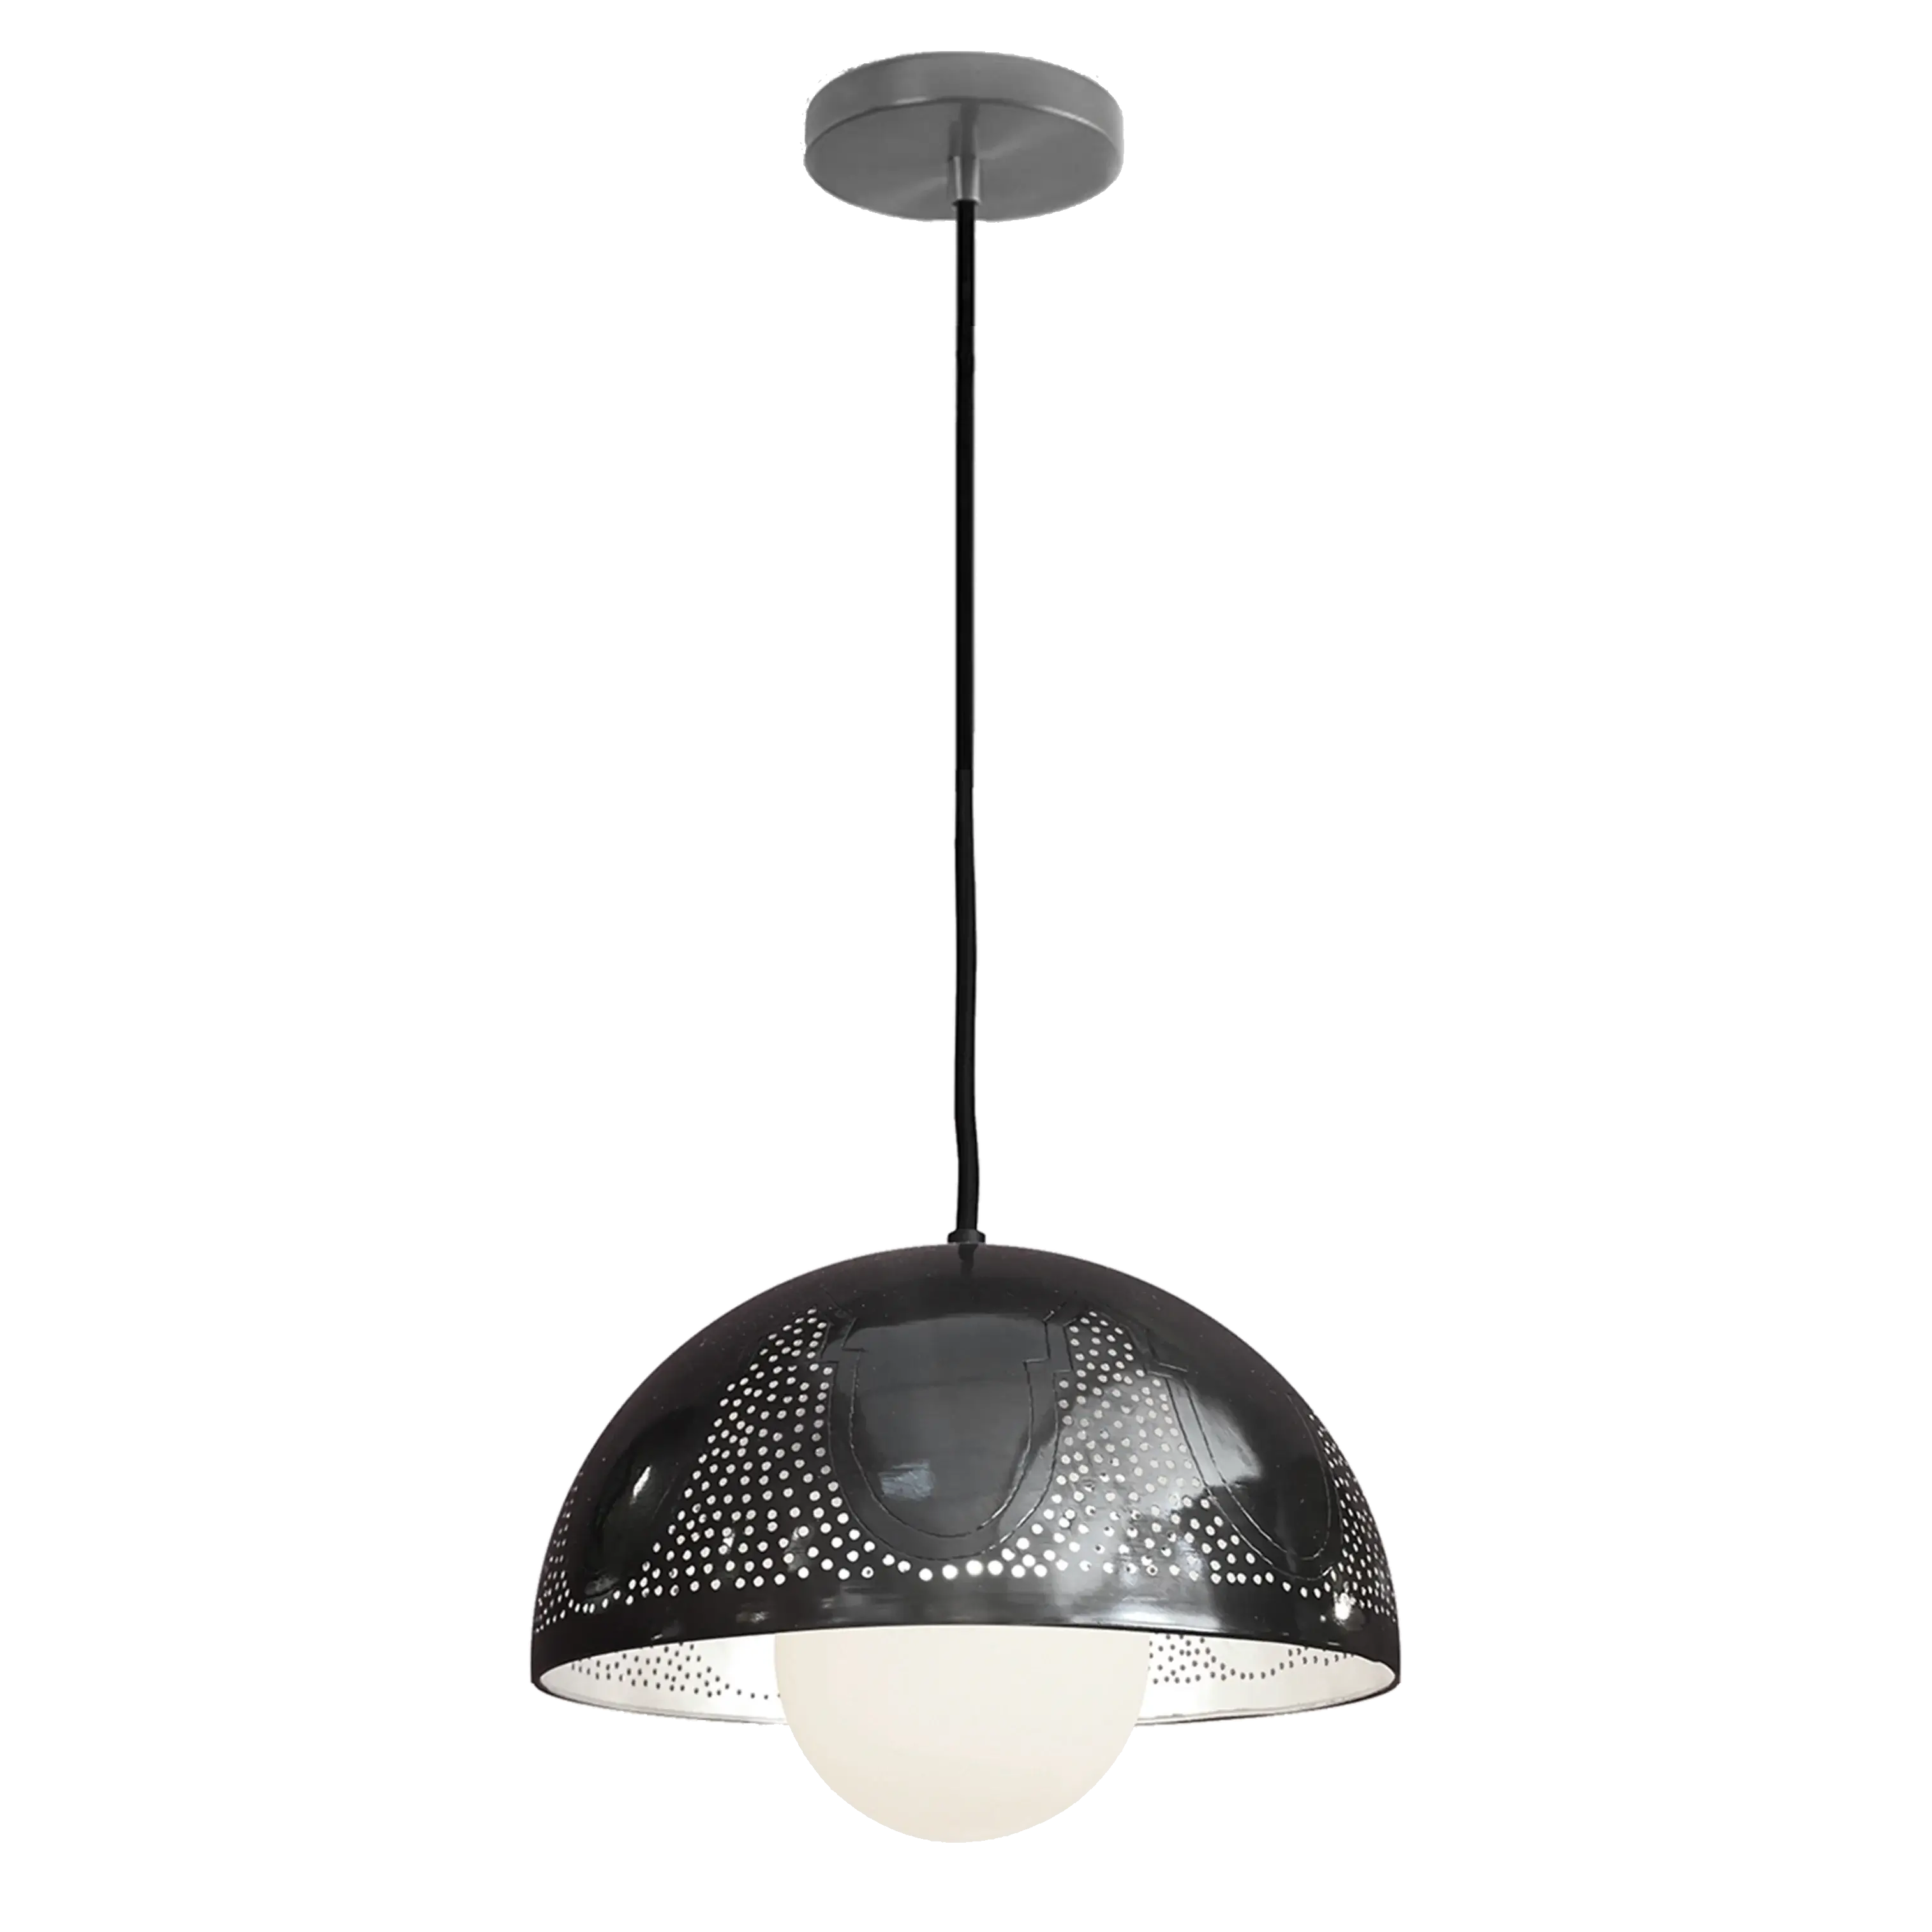 Dounia home Pendant light in black  made of Metal, Model: Taj  bell